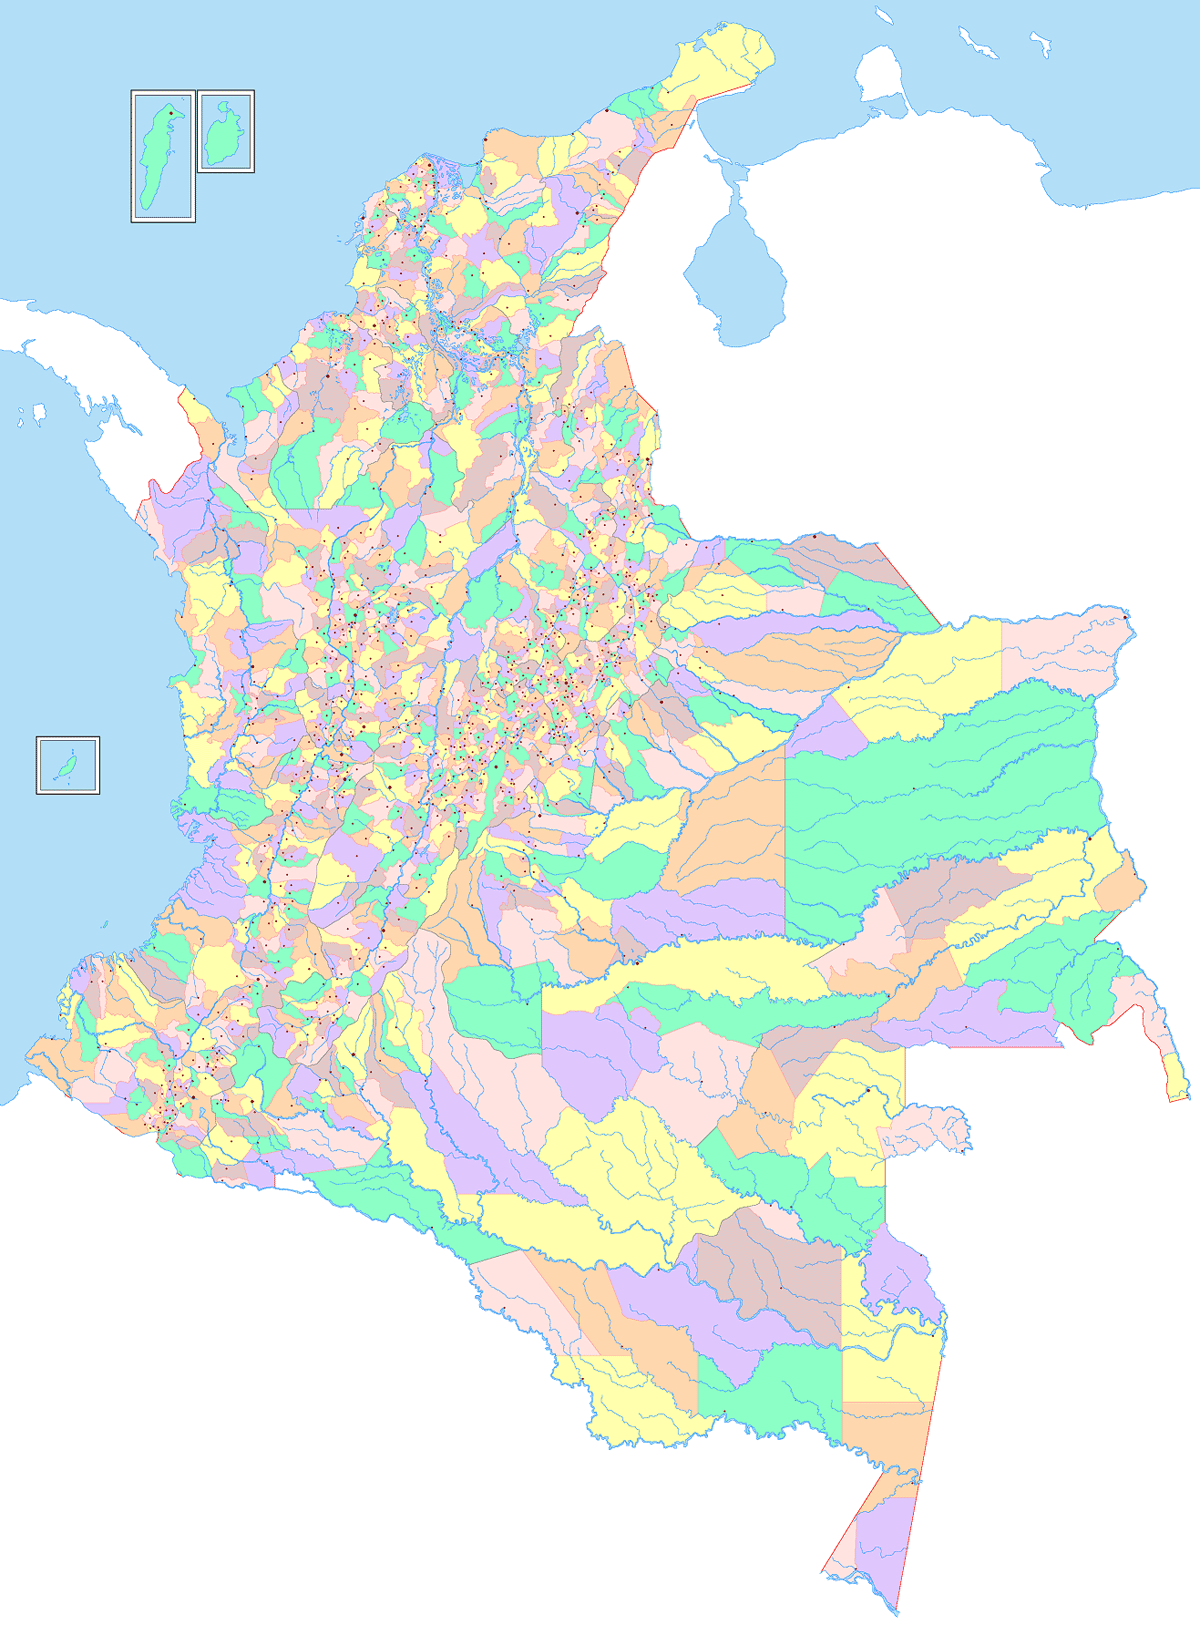 Municipalities Map of Colombia